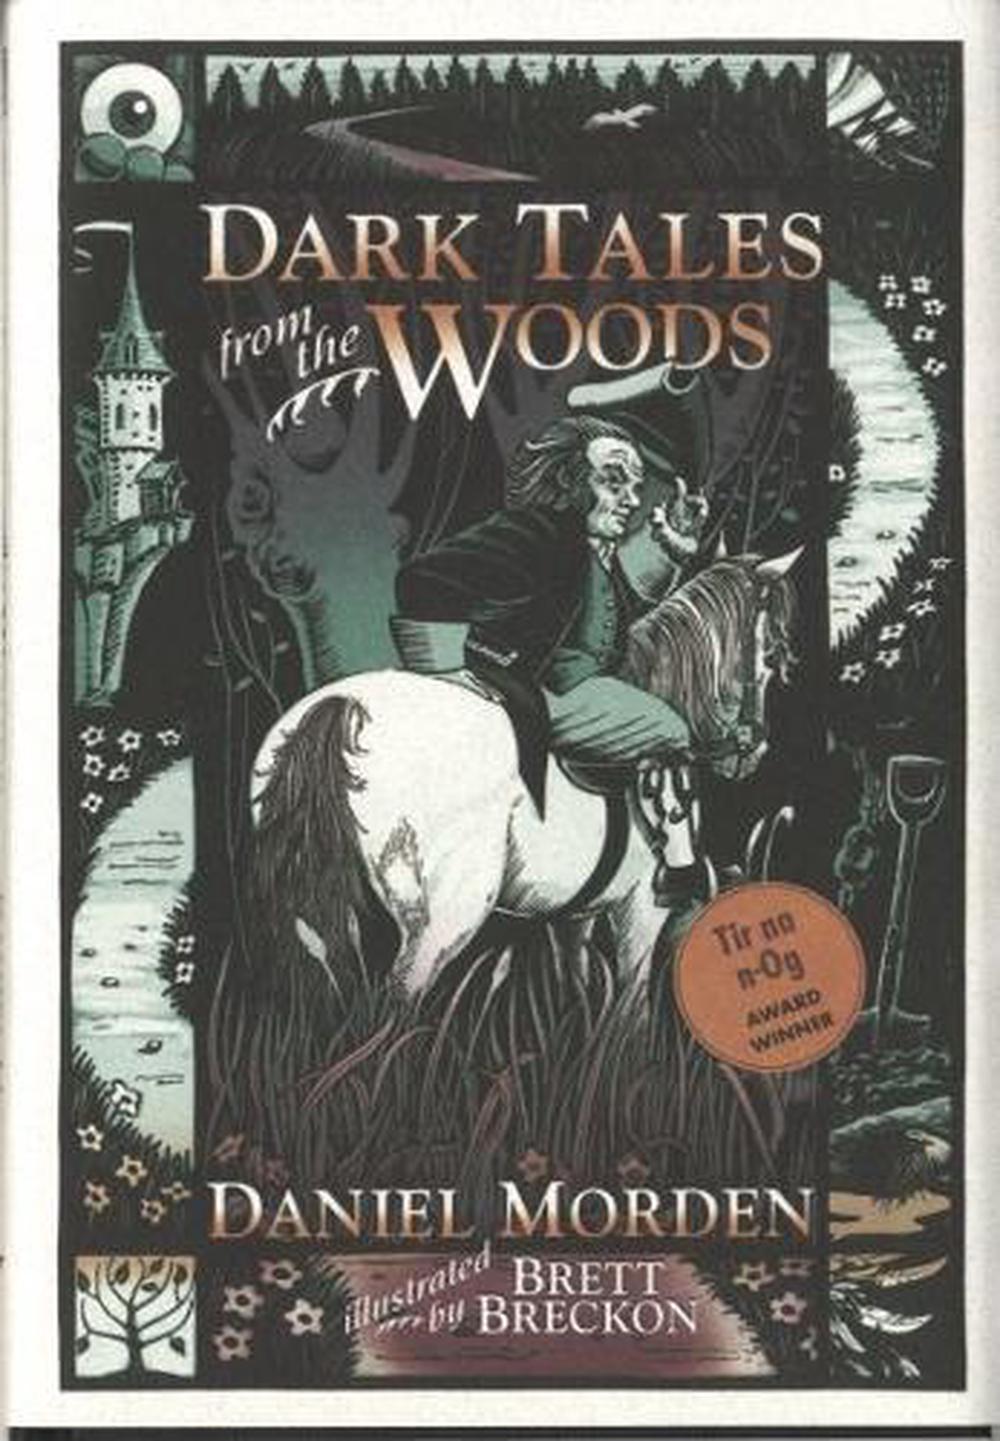 into the dark dark woods book